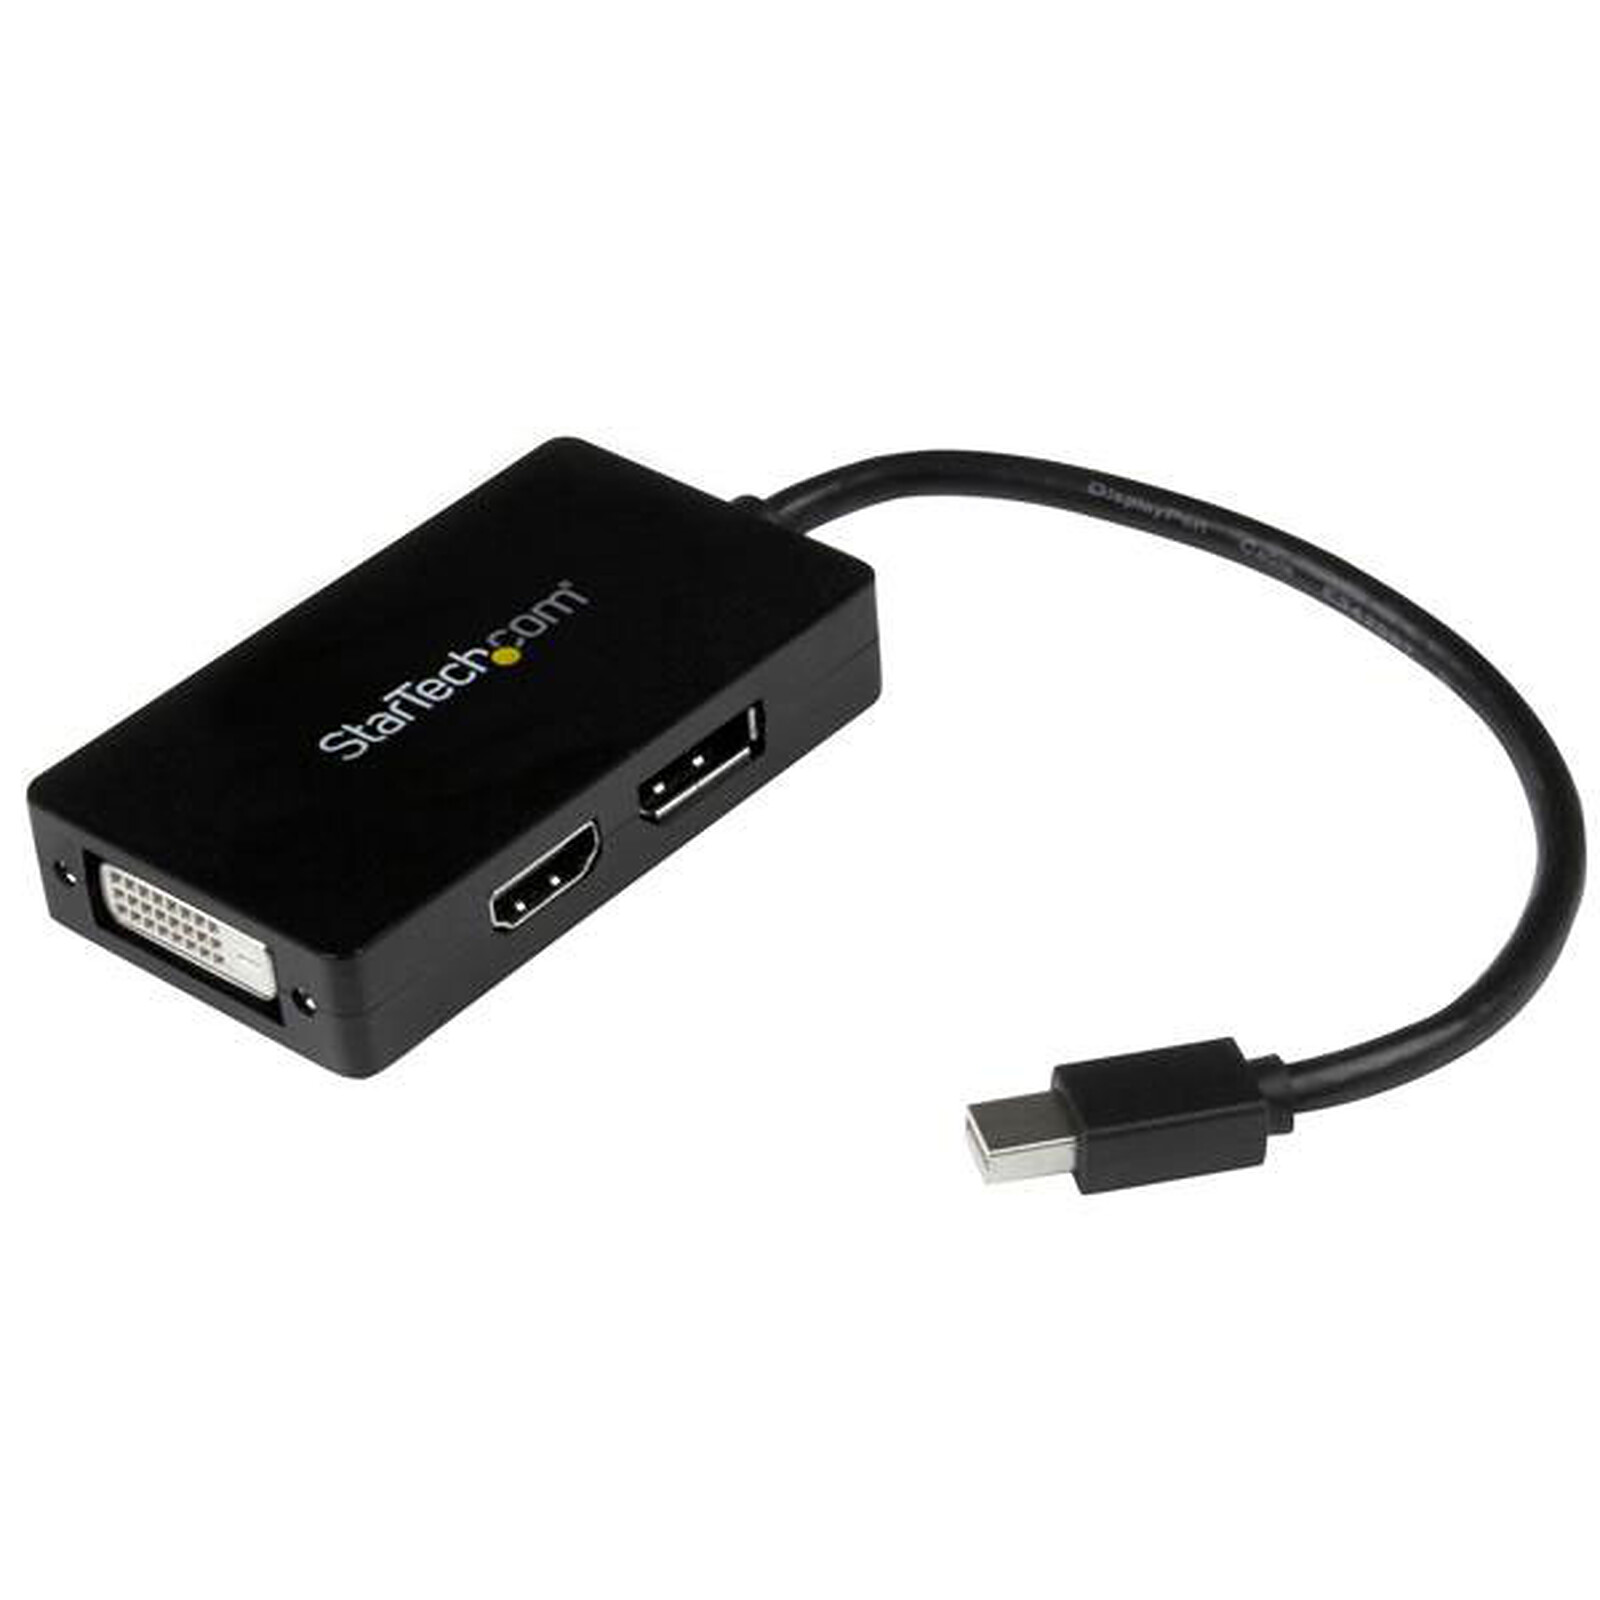 StarTech.com Adaptateur HDMI vers DisplayPort